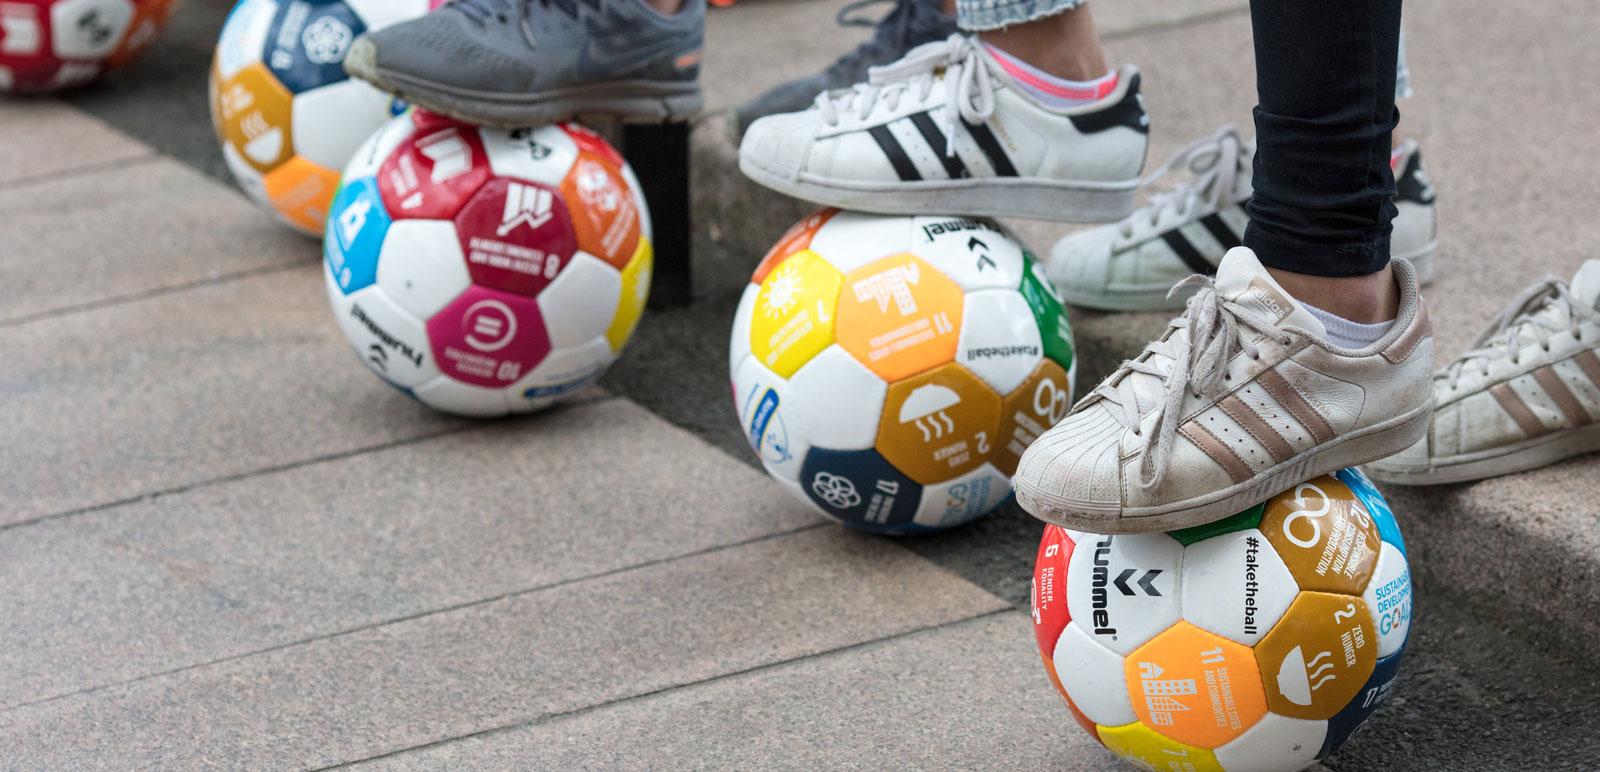 Footballs featuring the SDG logos